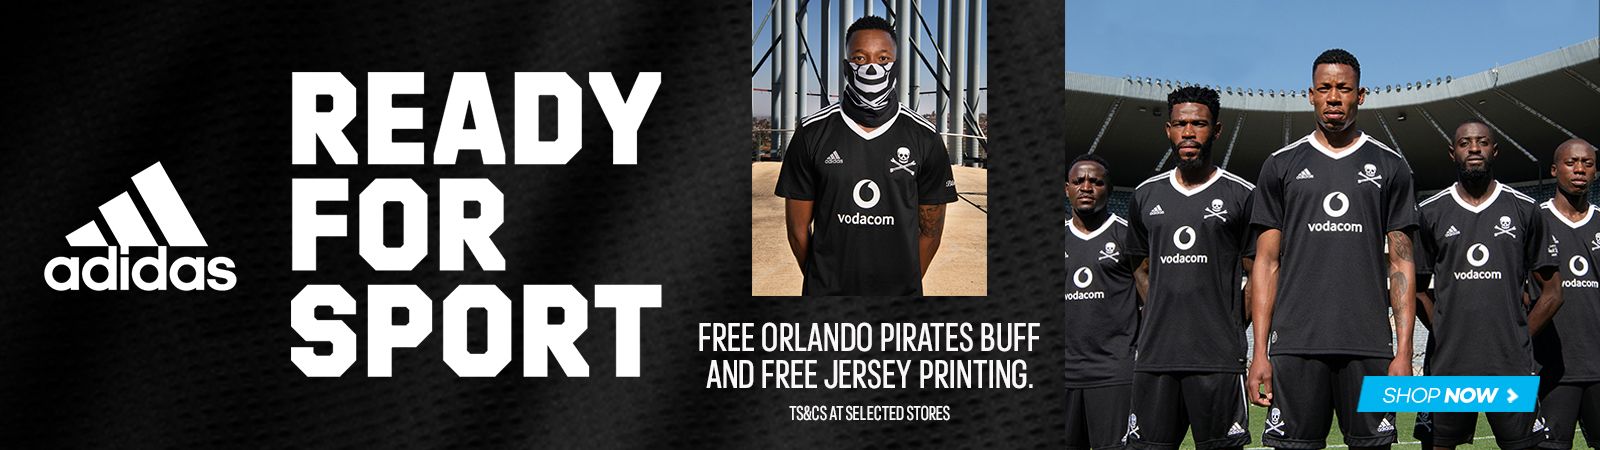 total sports orlando pirates jersey price